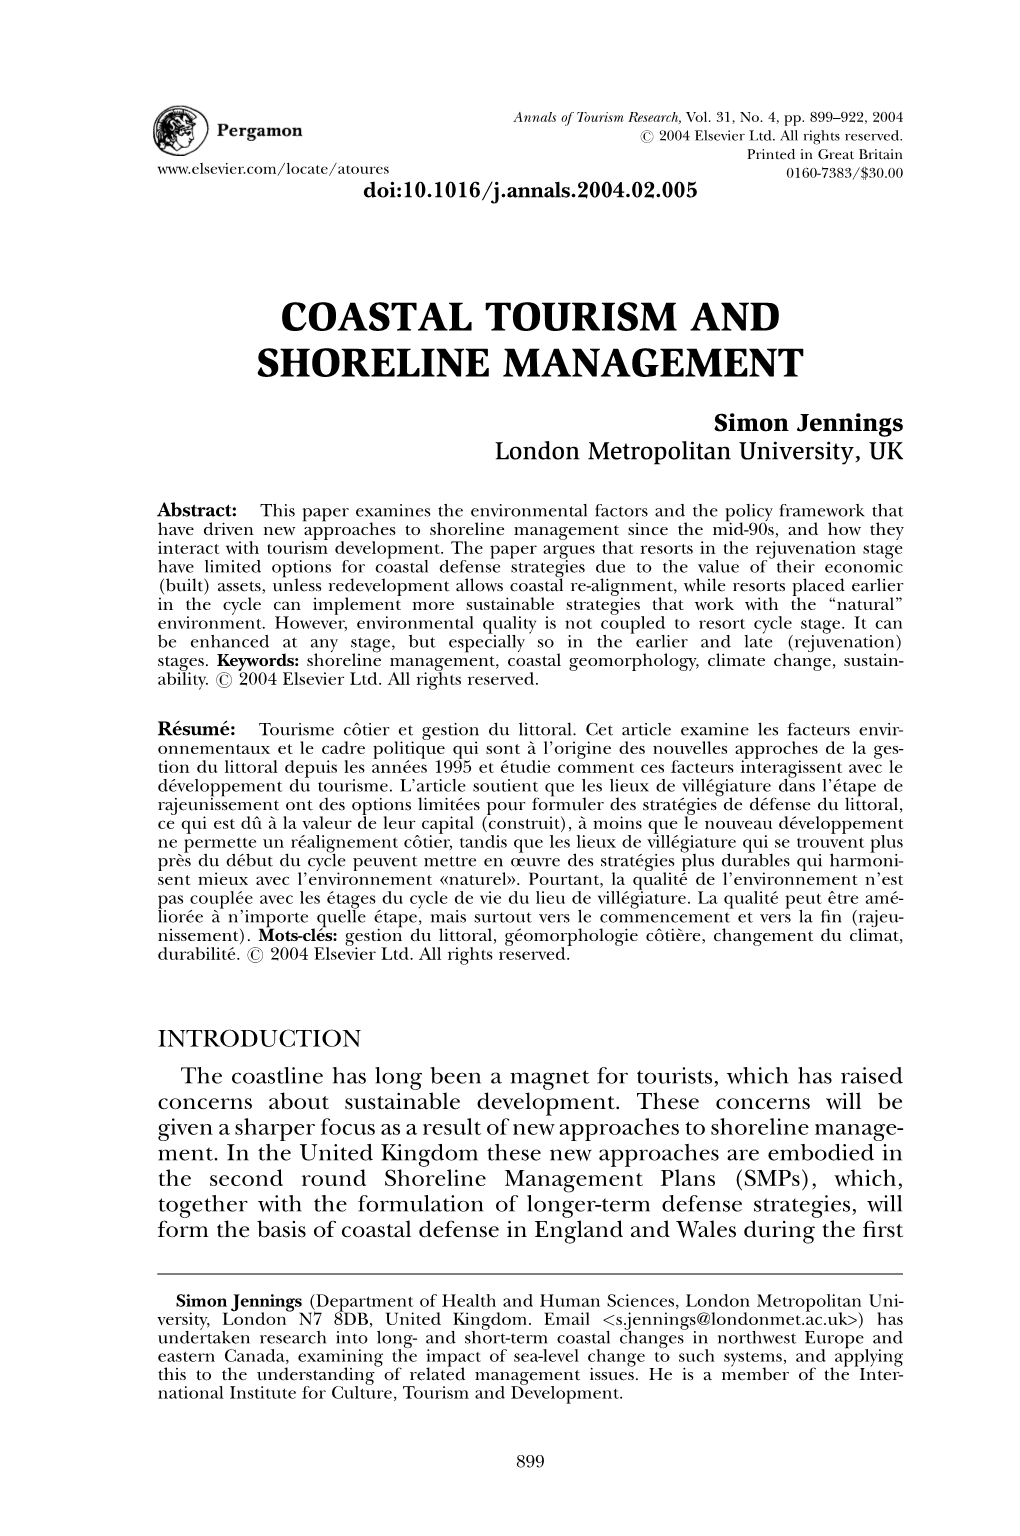 Coastal Tourism and Shoreline Management